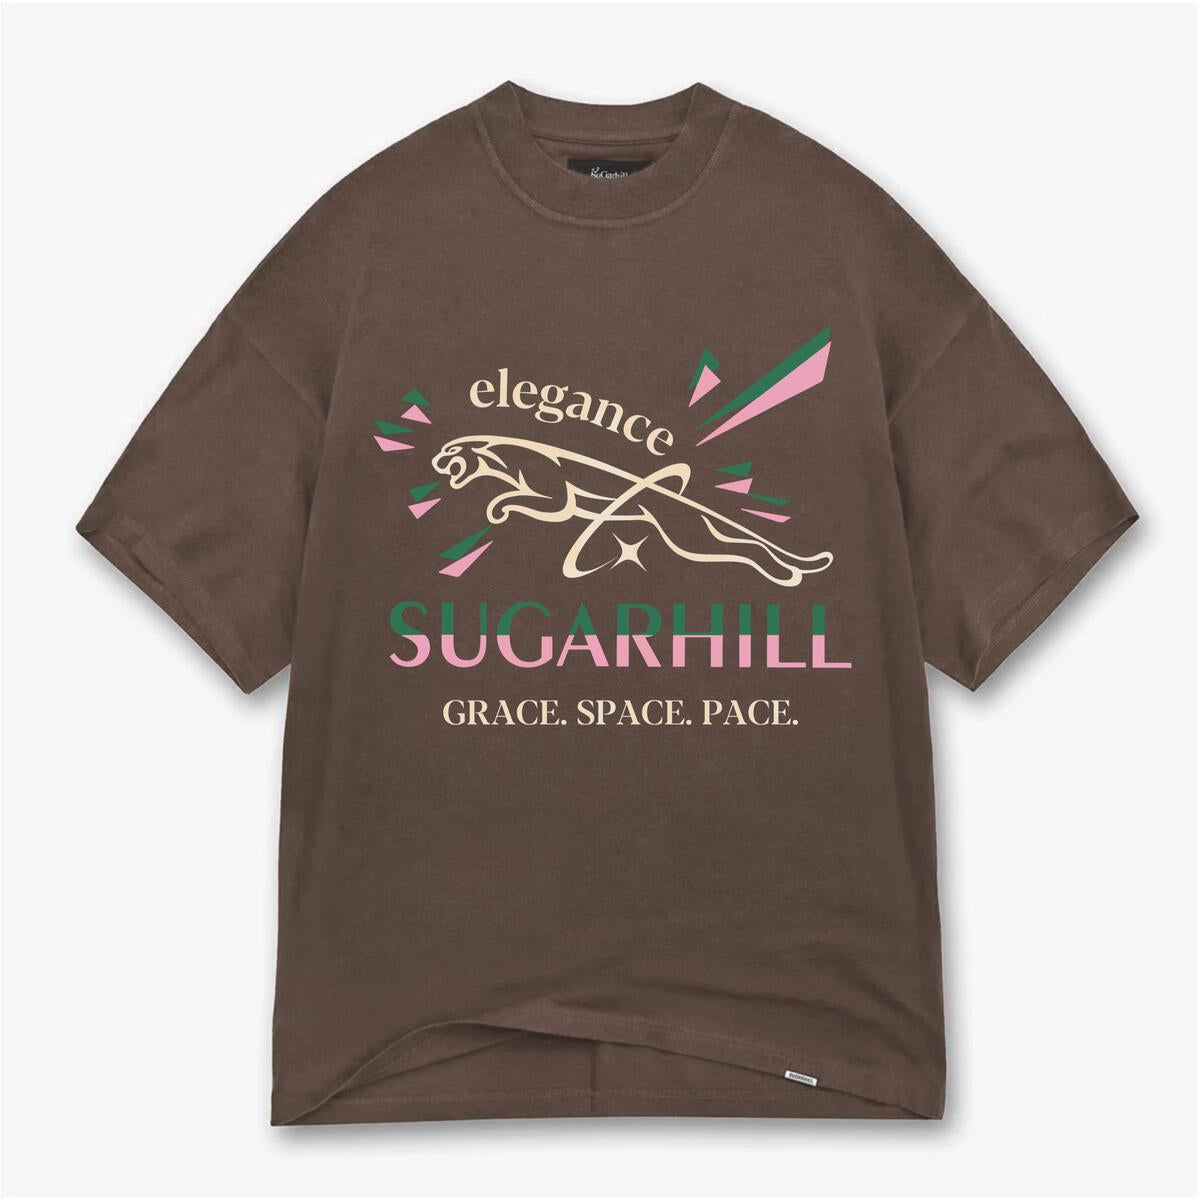 Sugarhill “Good Pace” Tee (Brown)